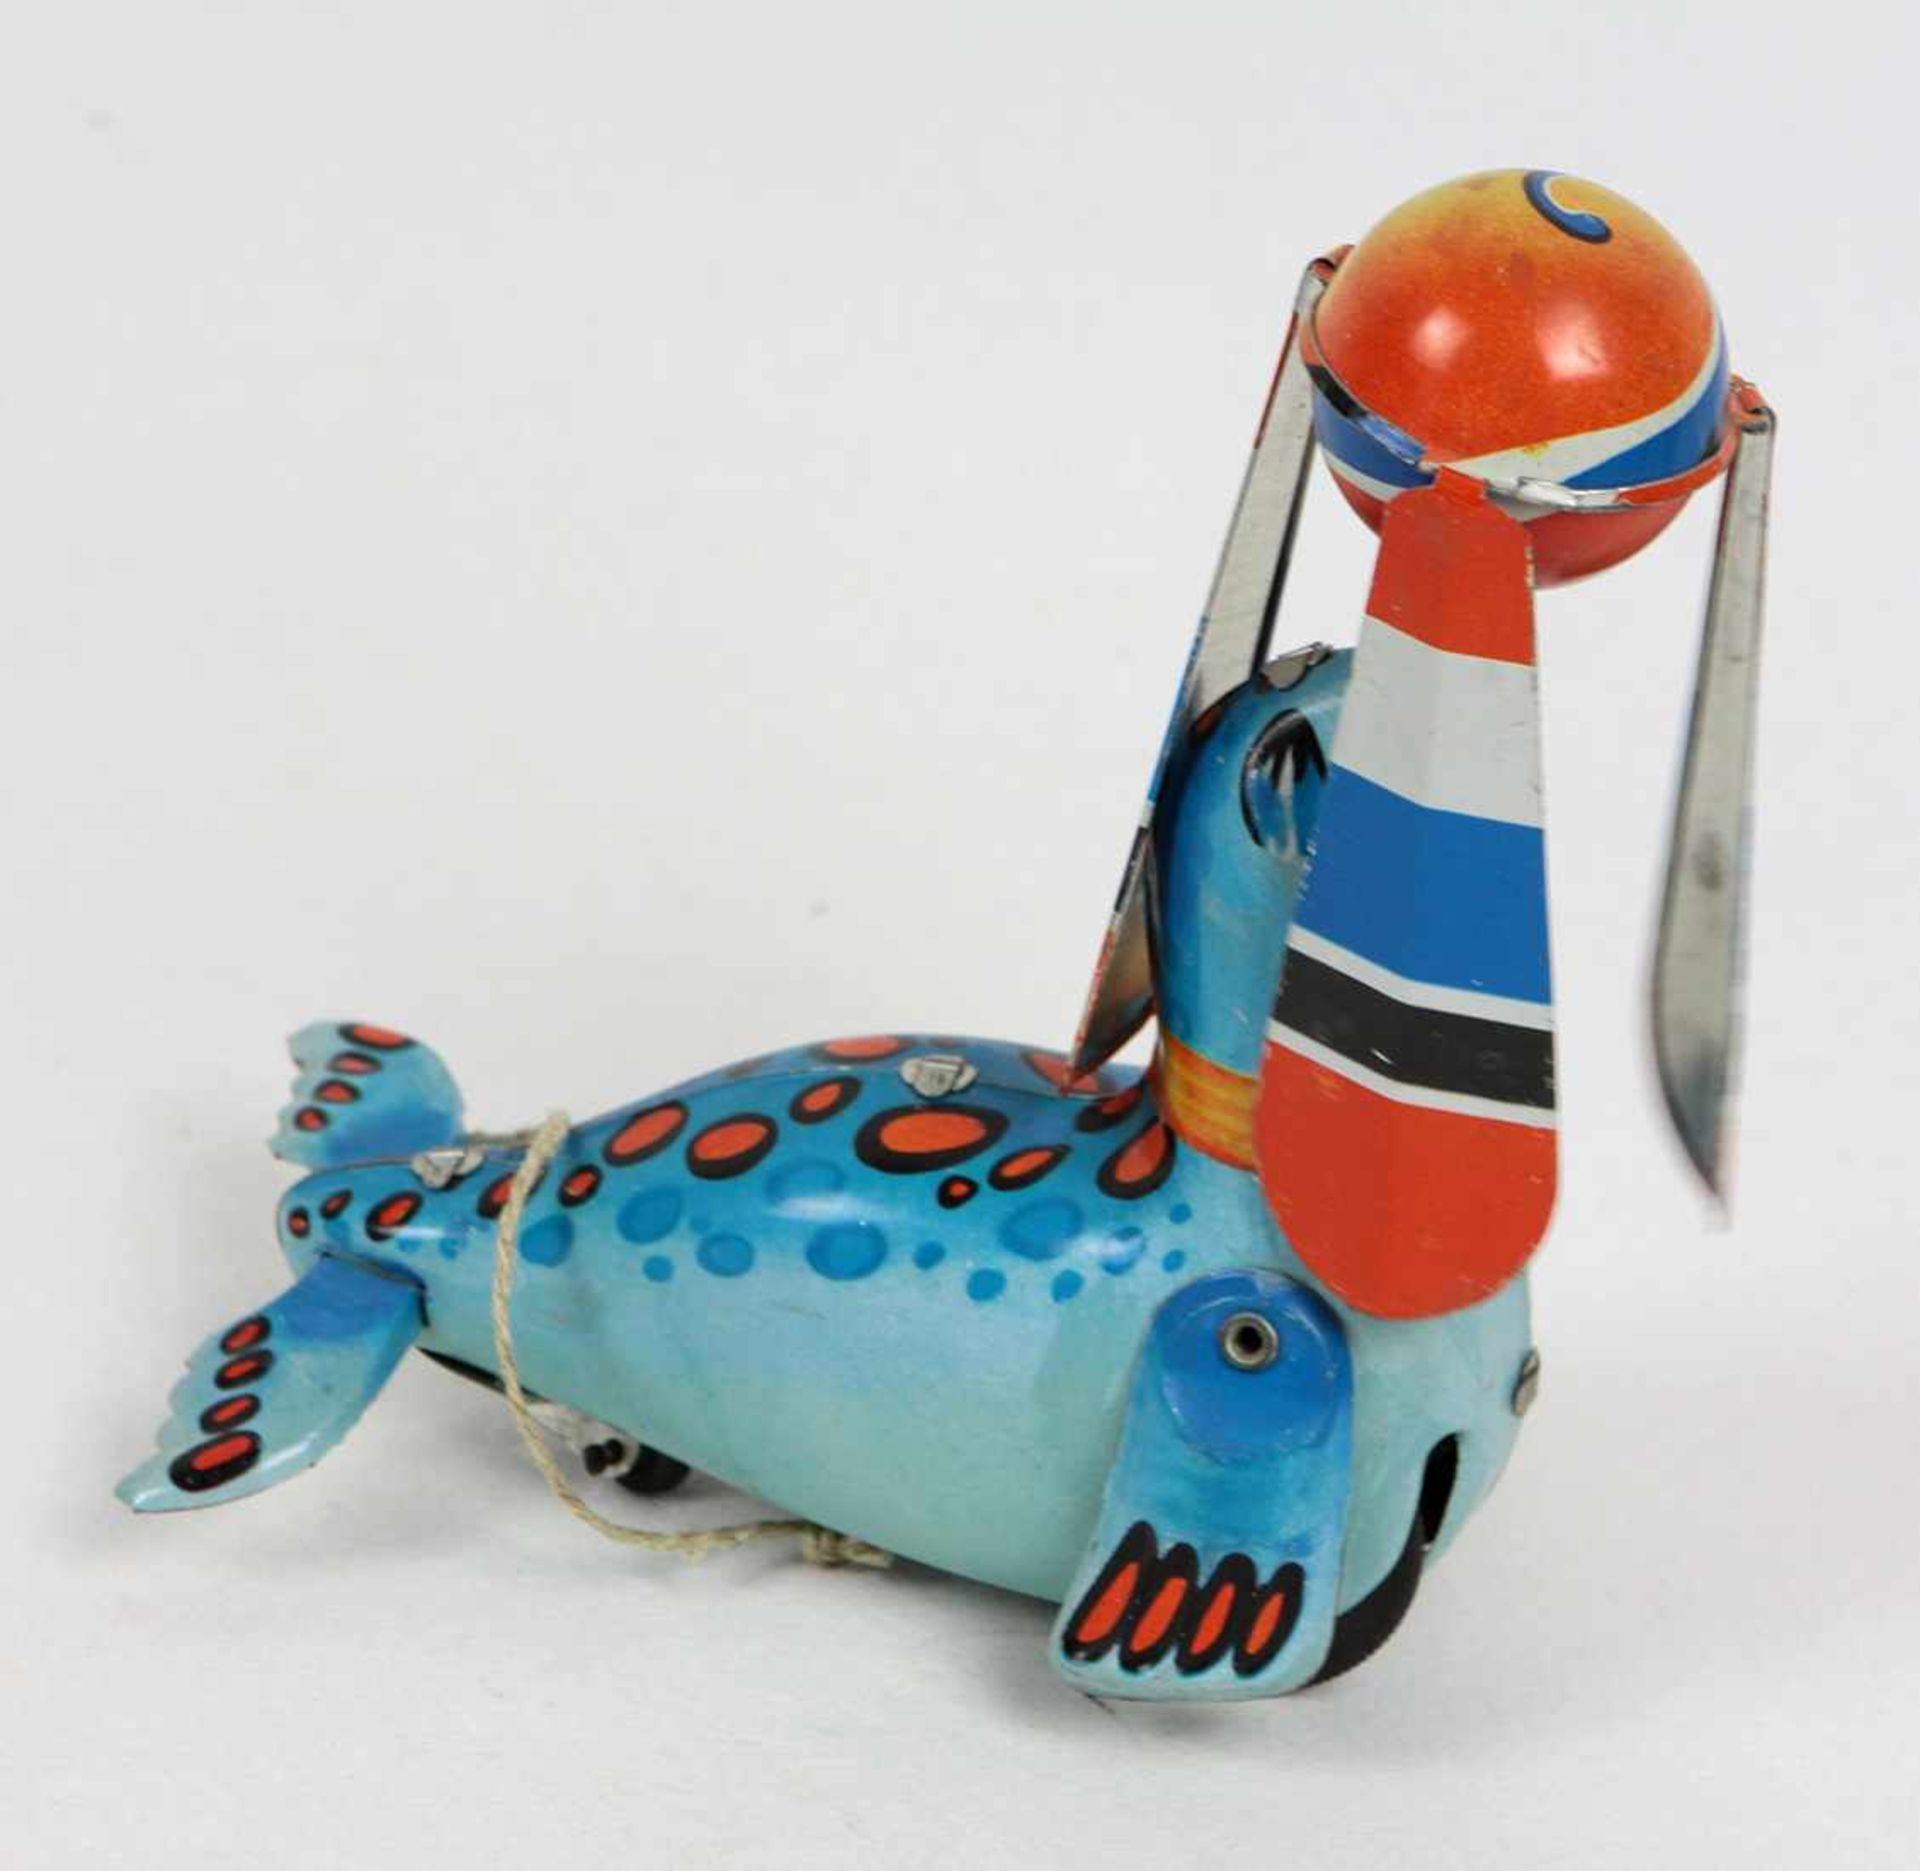 Seehund mit Ball u. Propeller Blech farbig lithographiert, ungemarkt, Hersteller wohl Fa. Girly